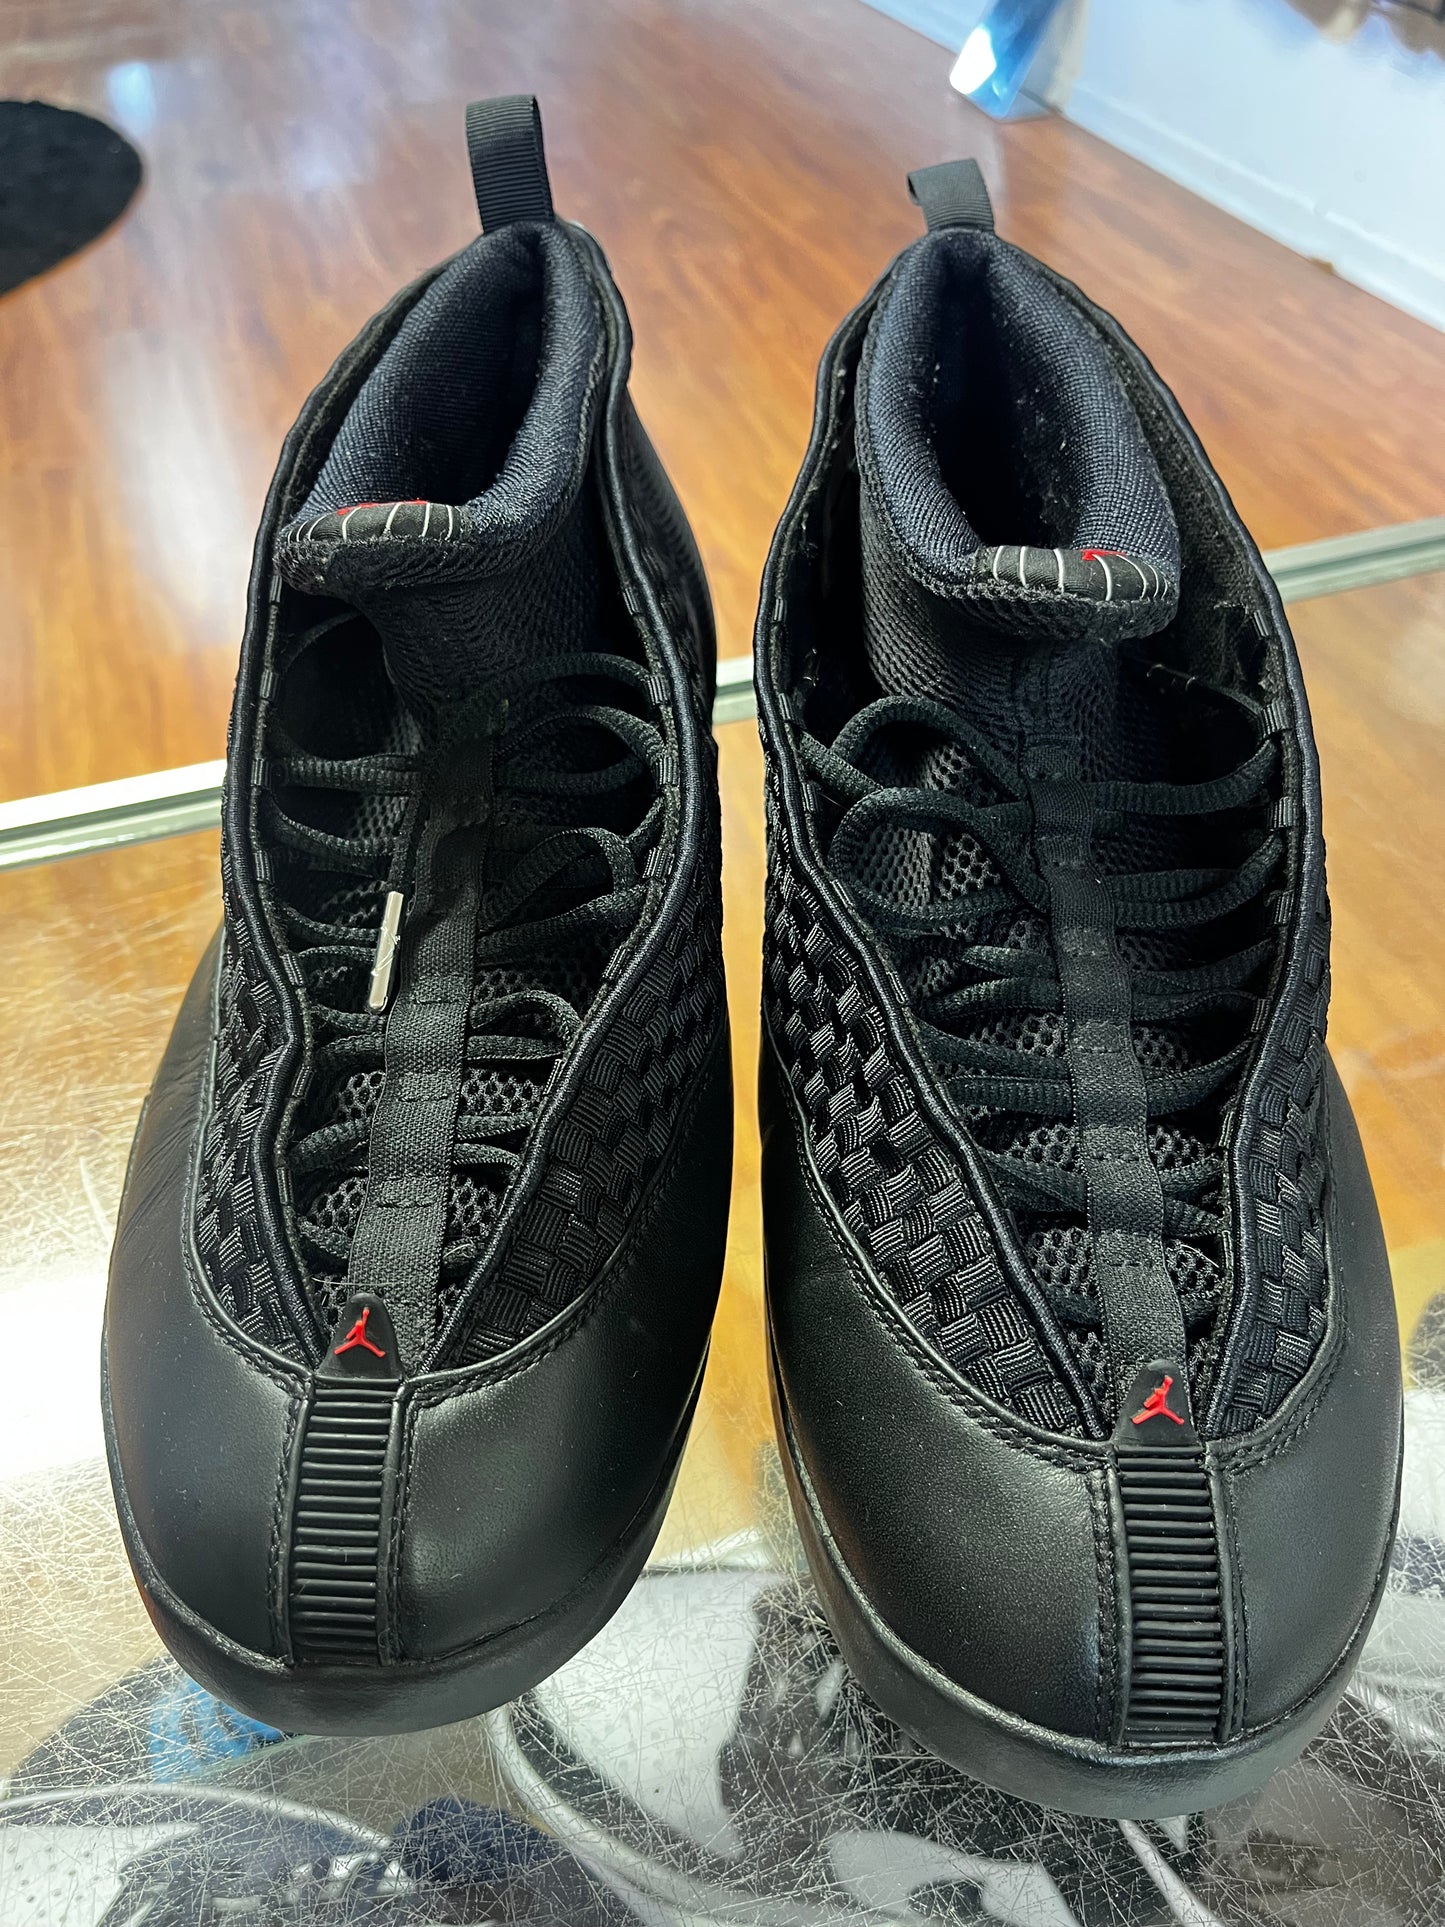 Size 12 Air Jordan 15 "Stealth" (MAMO)